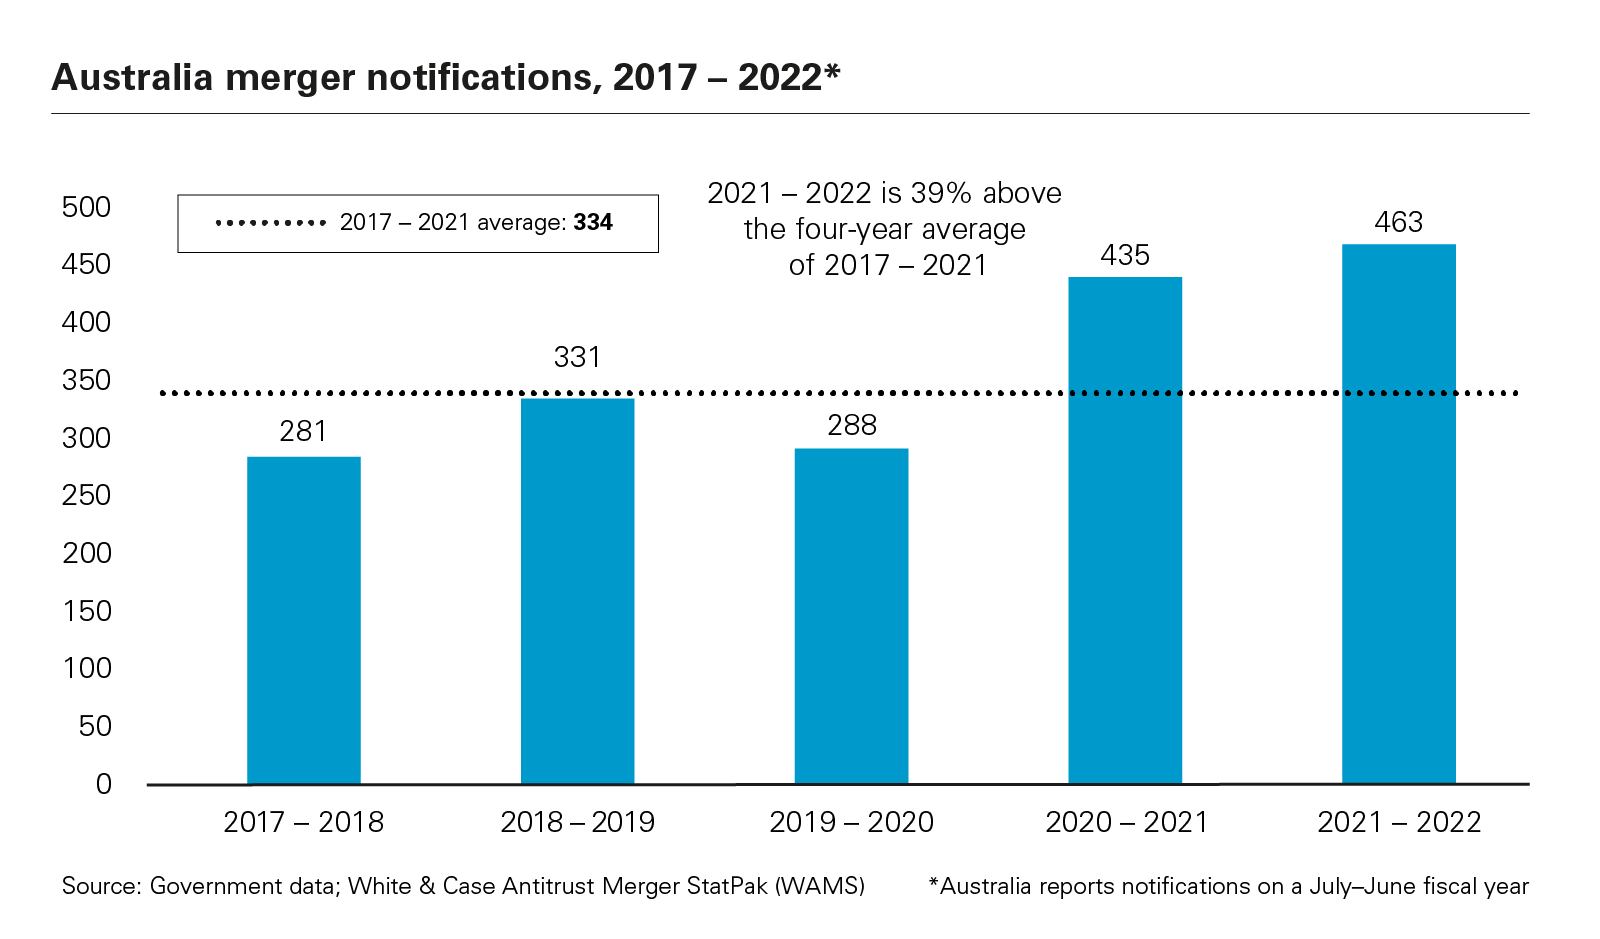 Australia merger notifications, 2017 -2022* graph